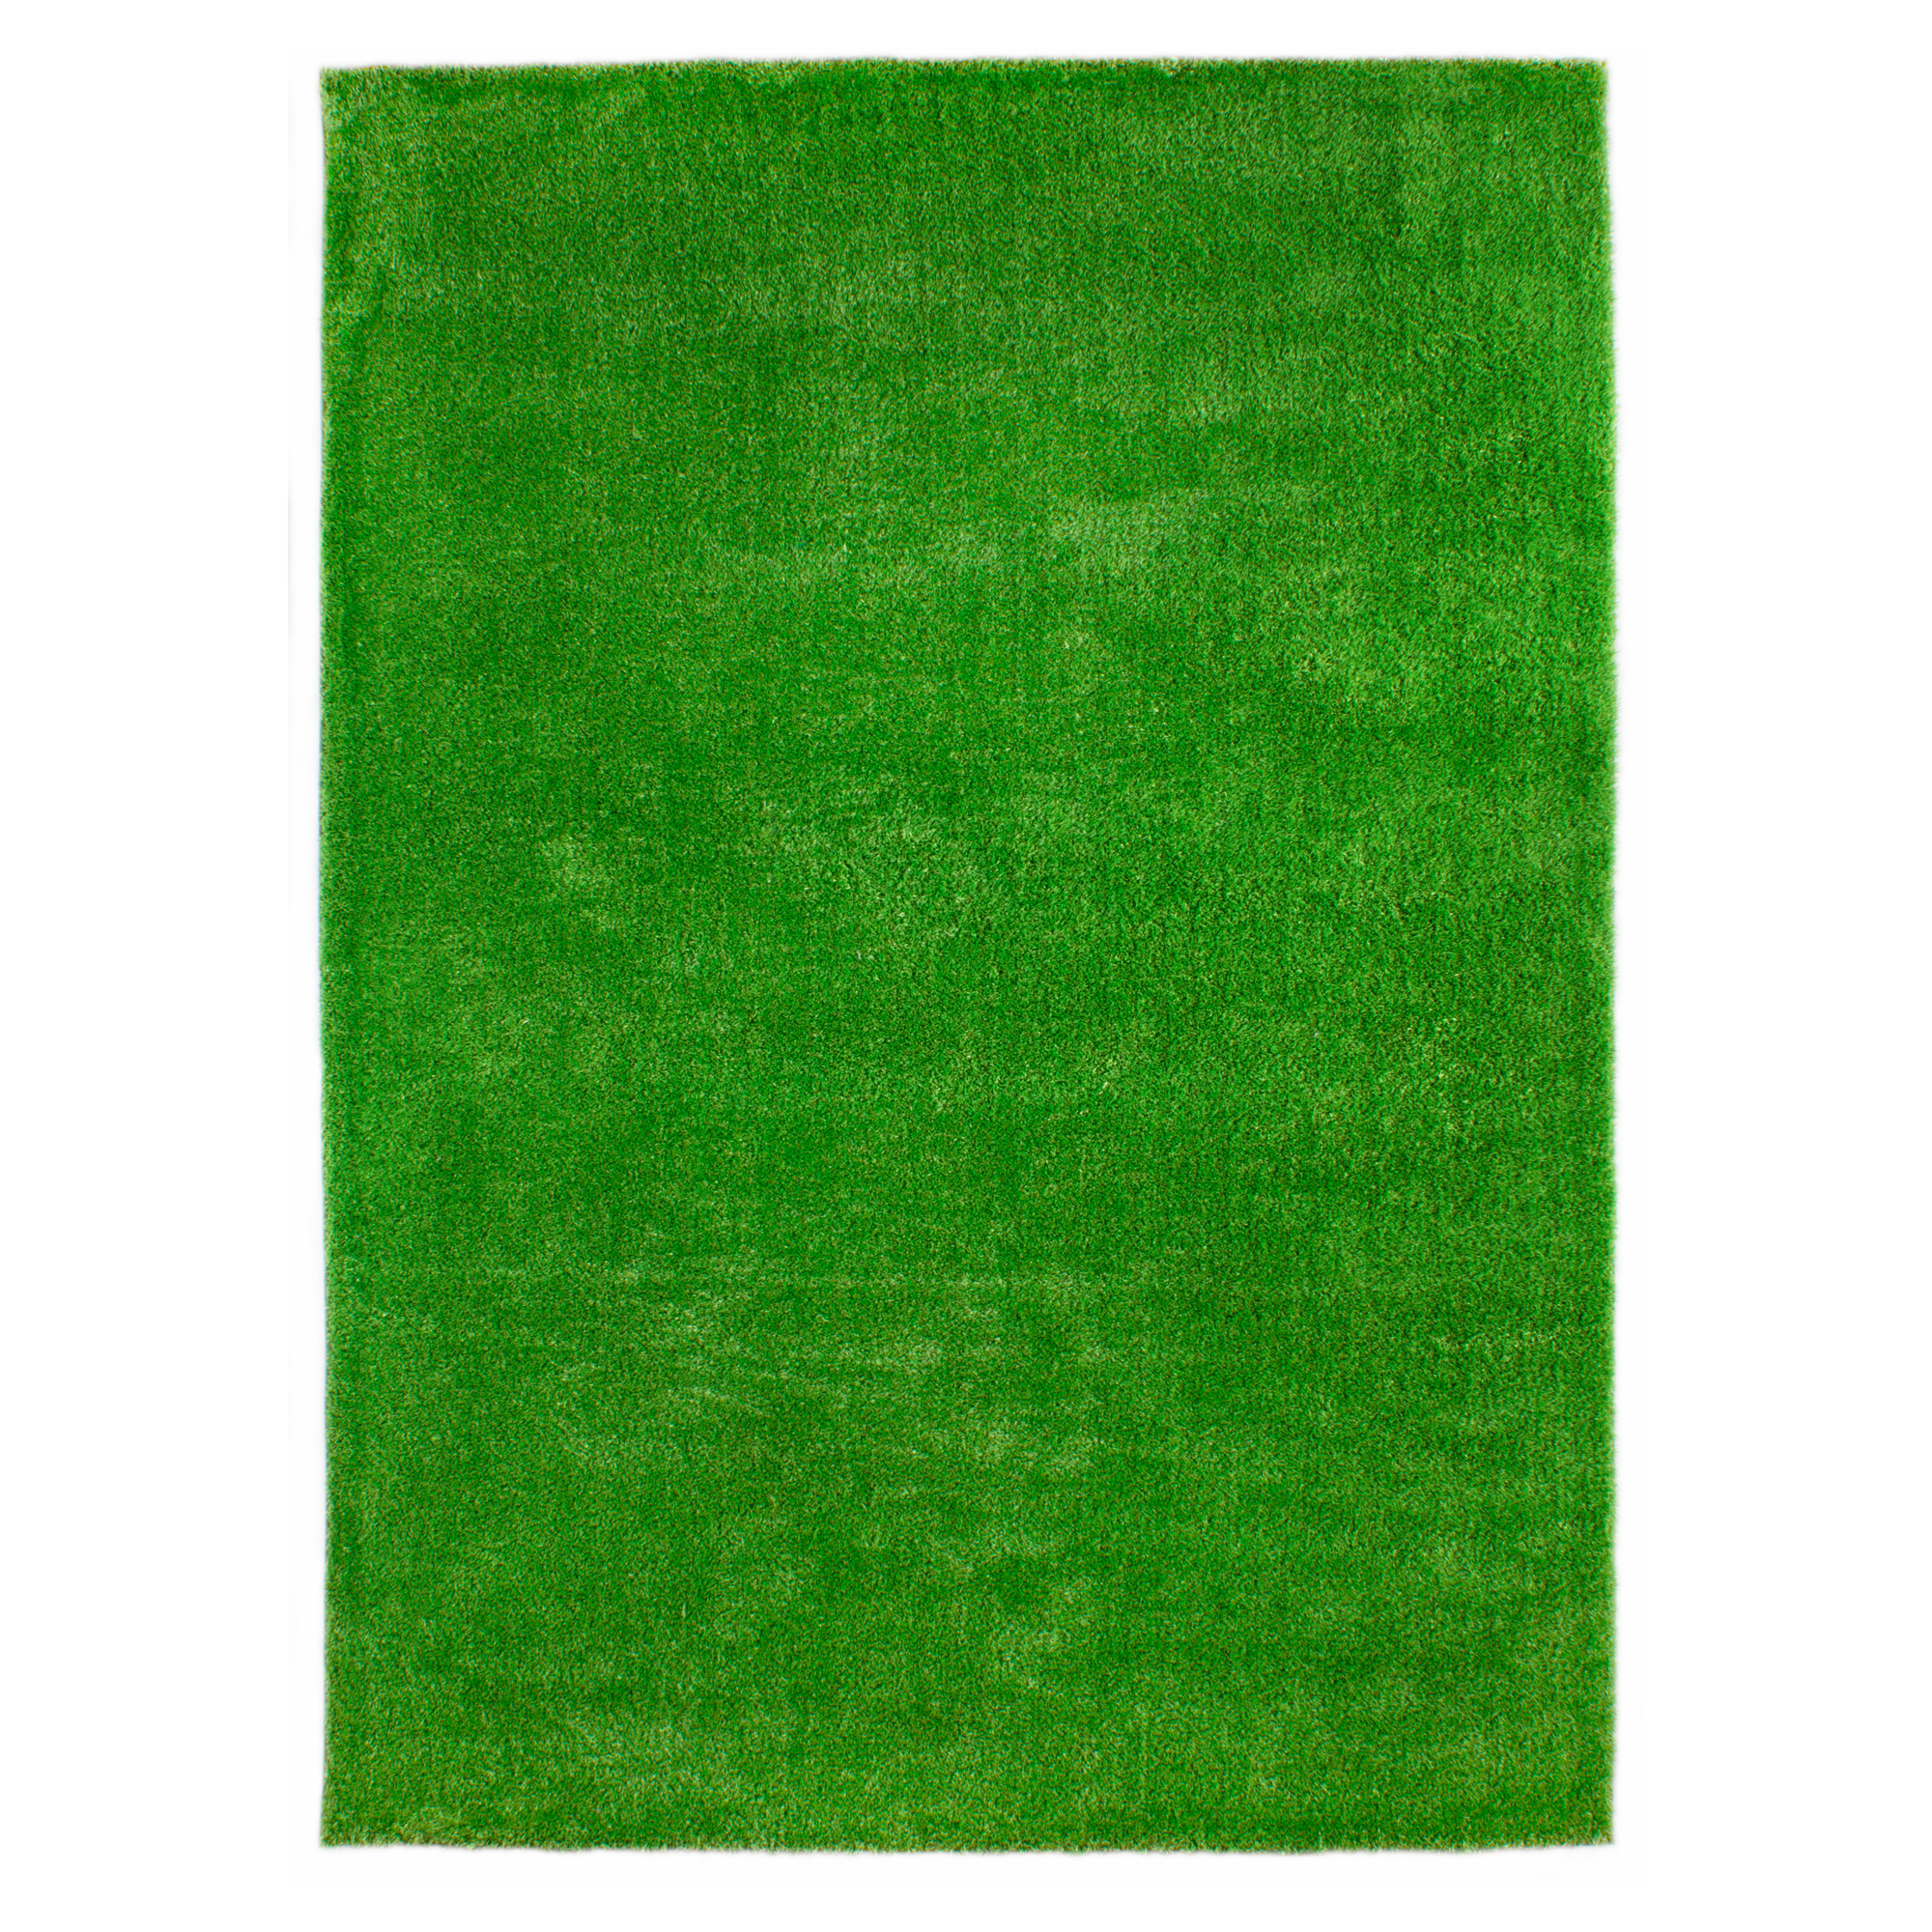 Reinkemeier Teppich "Manarolo" grün 190 x 130 cm + product picture